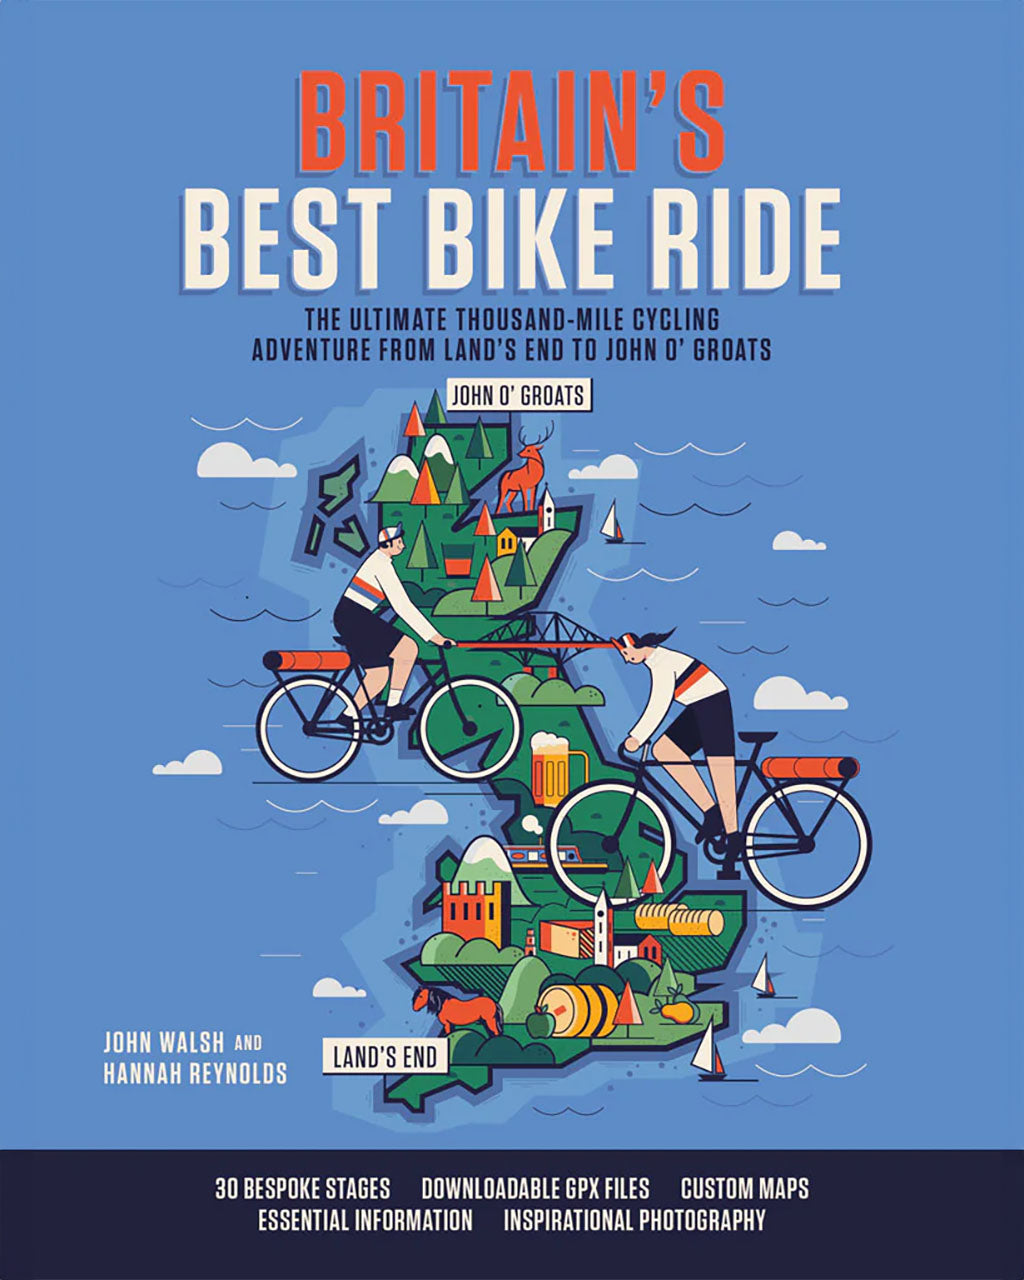 Britain's Best Bike Ride by John Walsh & Hannah Reynolds